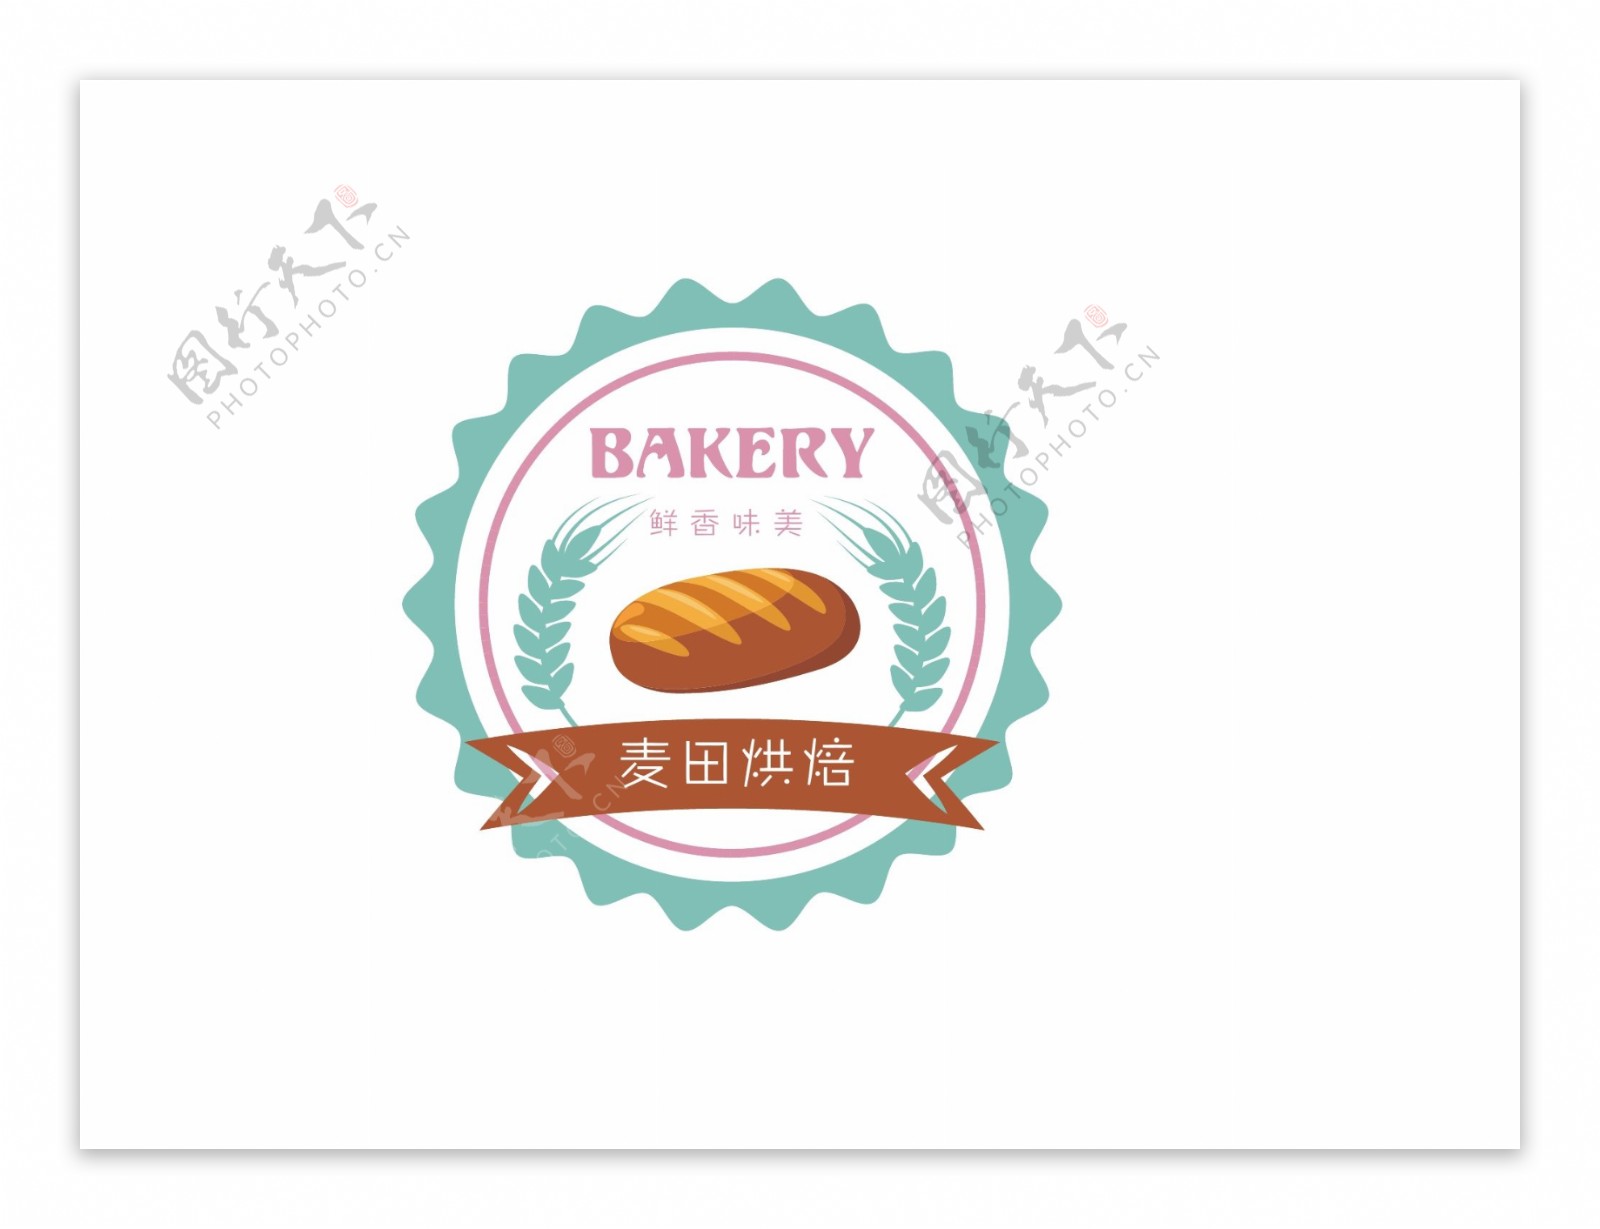 烘焙logo蛋糕logo